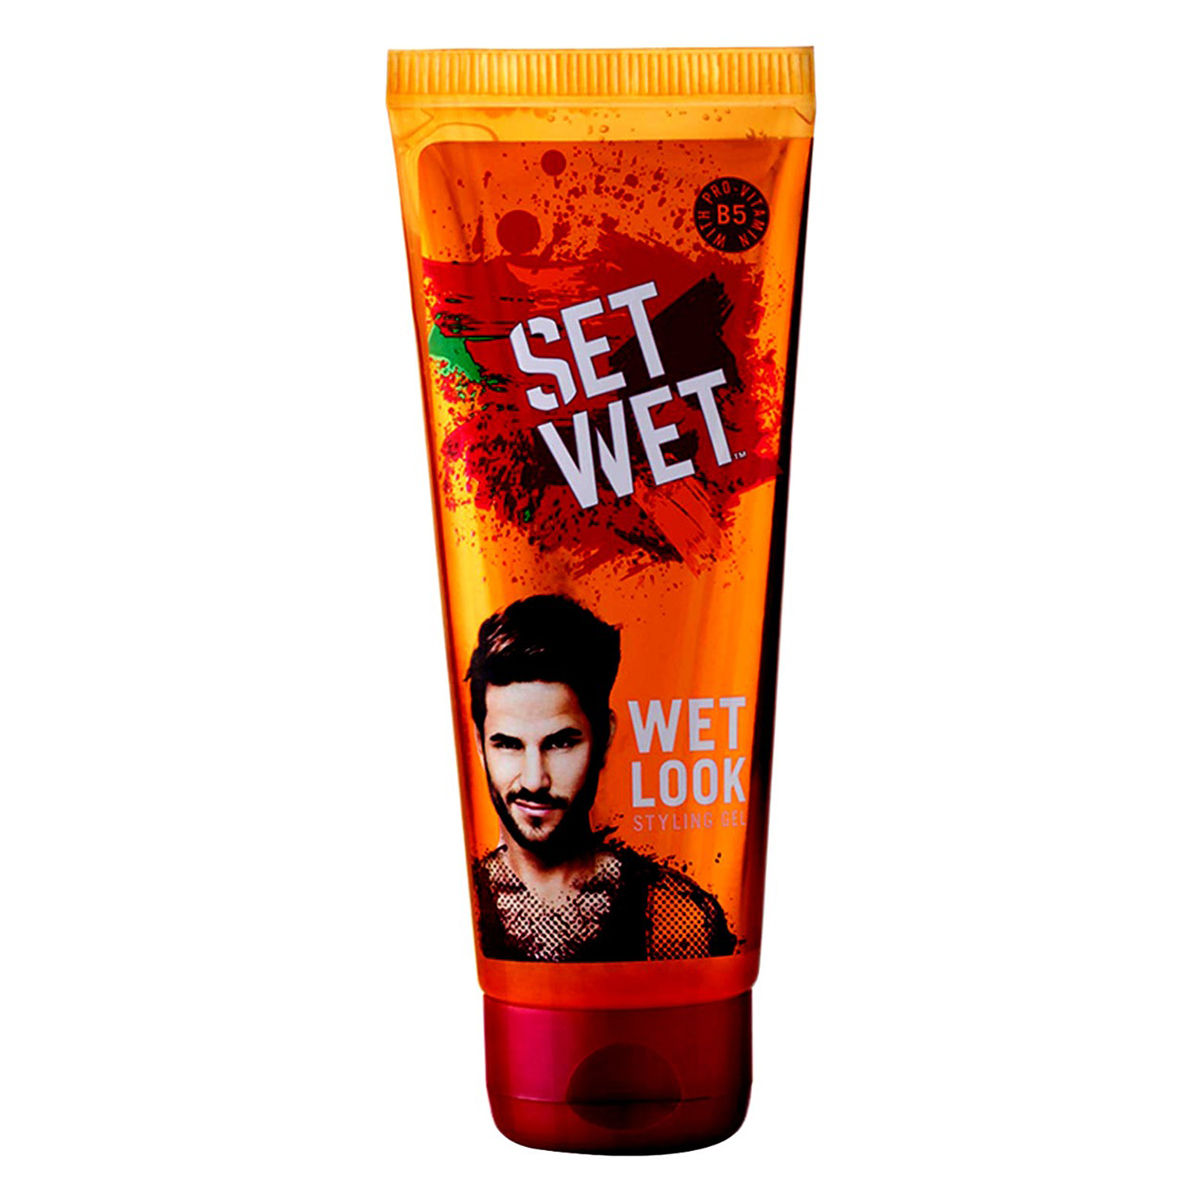 Set Wet Wet Look Hair Styling Gel, 100 ml | Uses, Benefits, Price ...